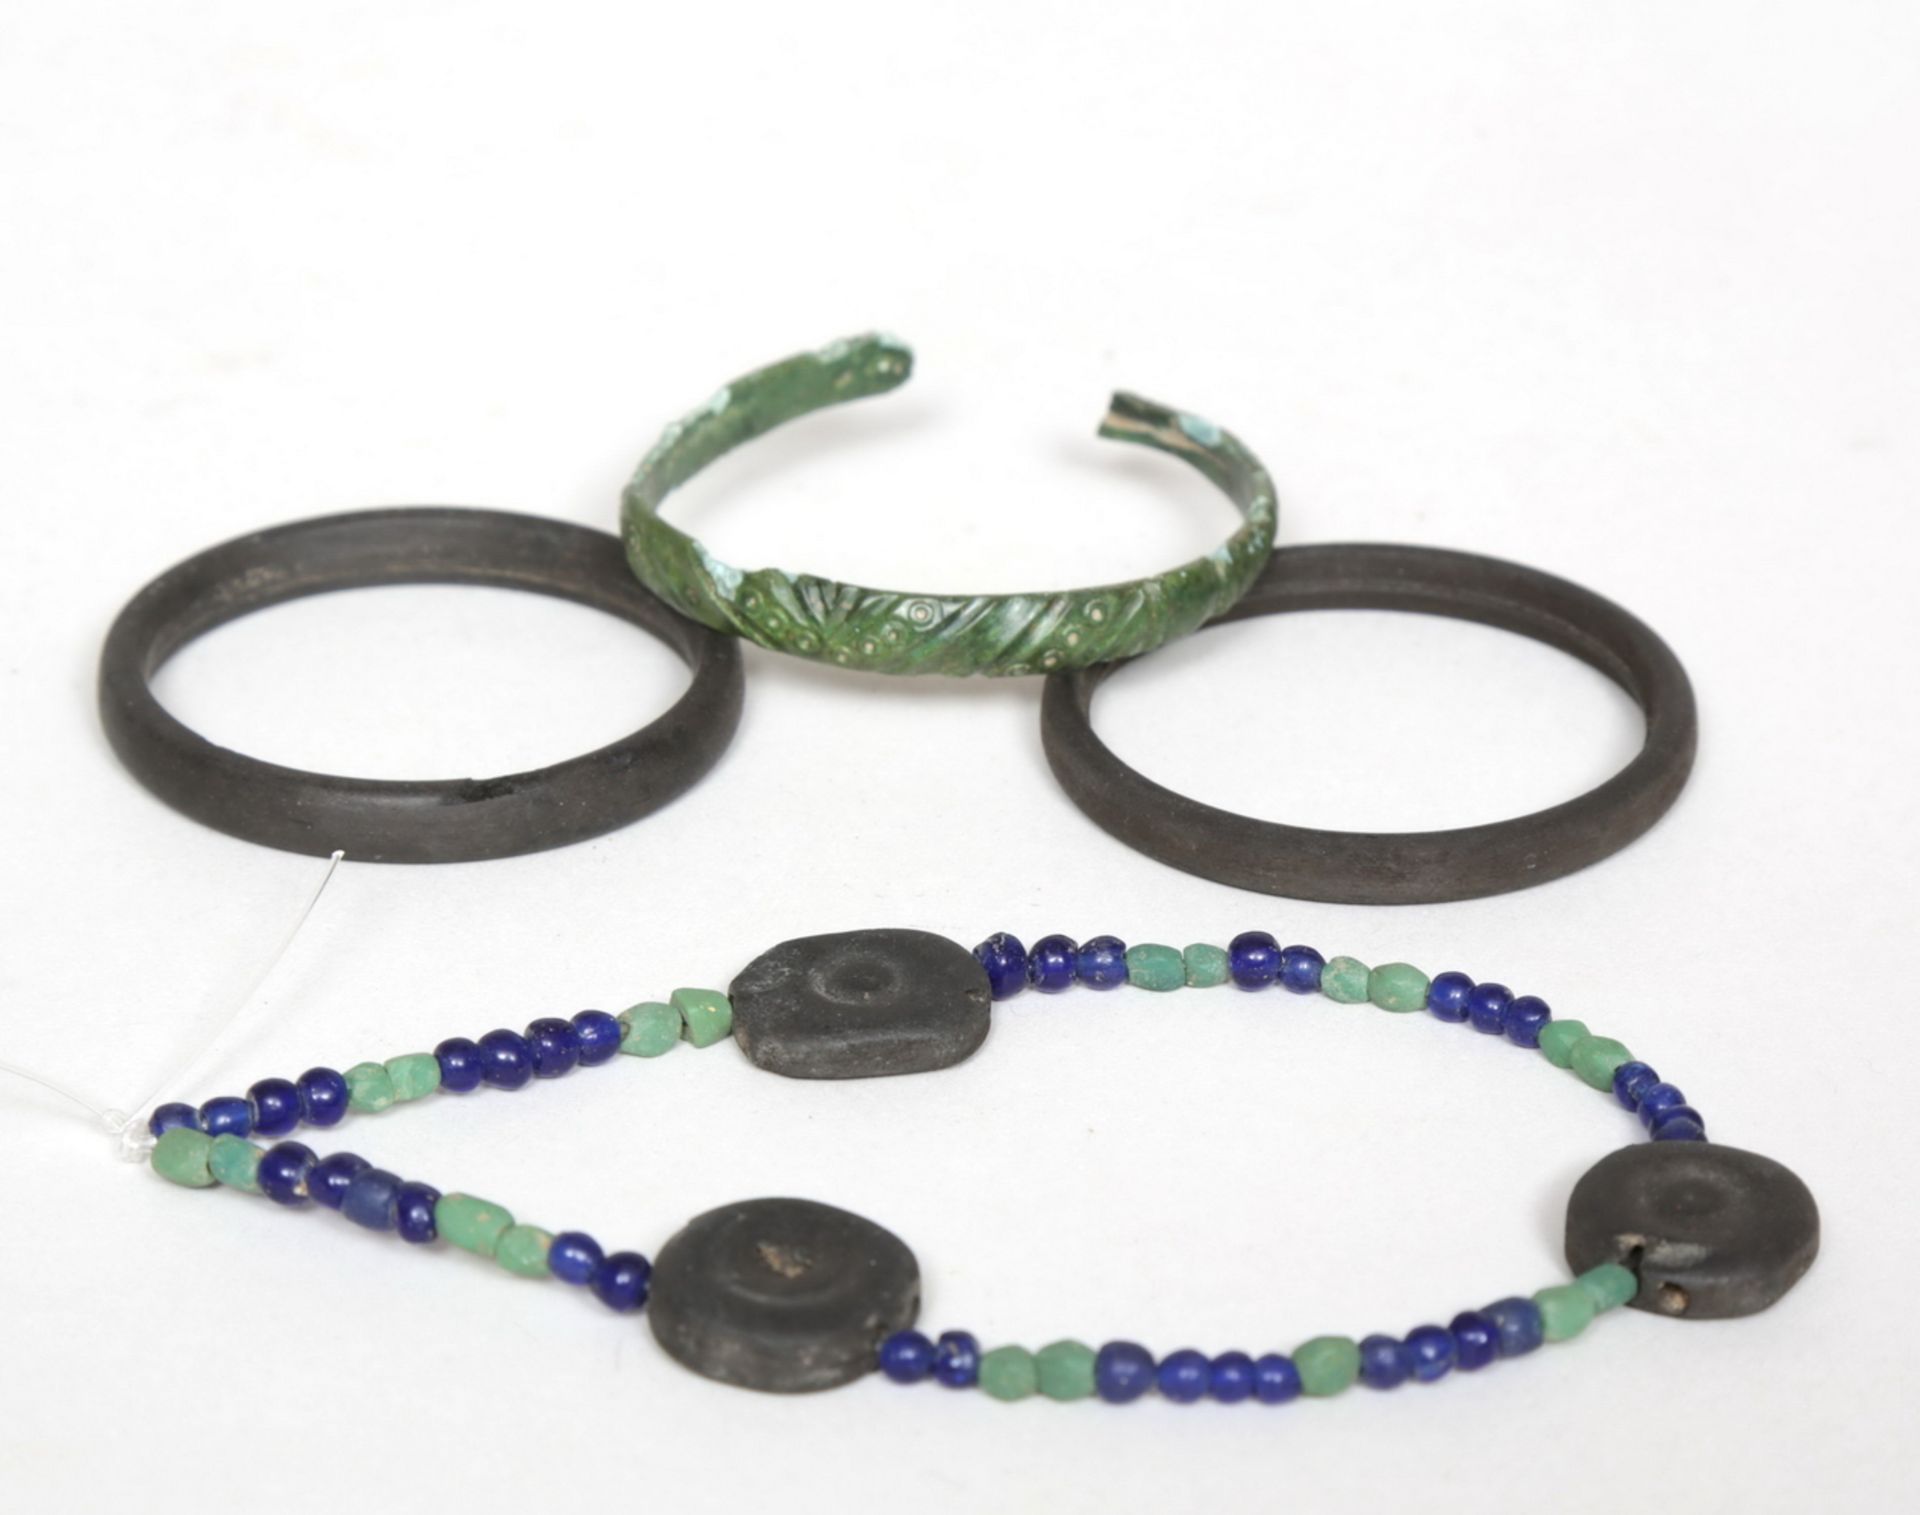 Roman, two black jet bracelets, a bronze bracelet and a beaded bracelet with three black jet beads a - Image 2 of 2